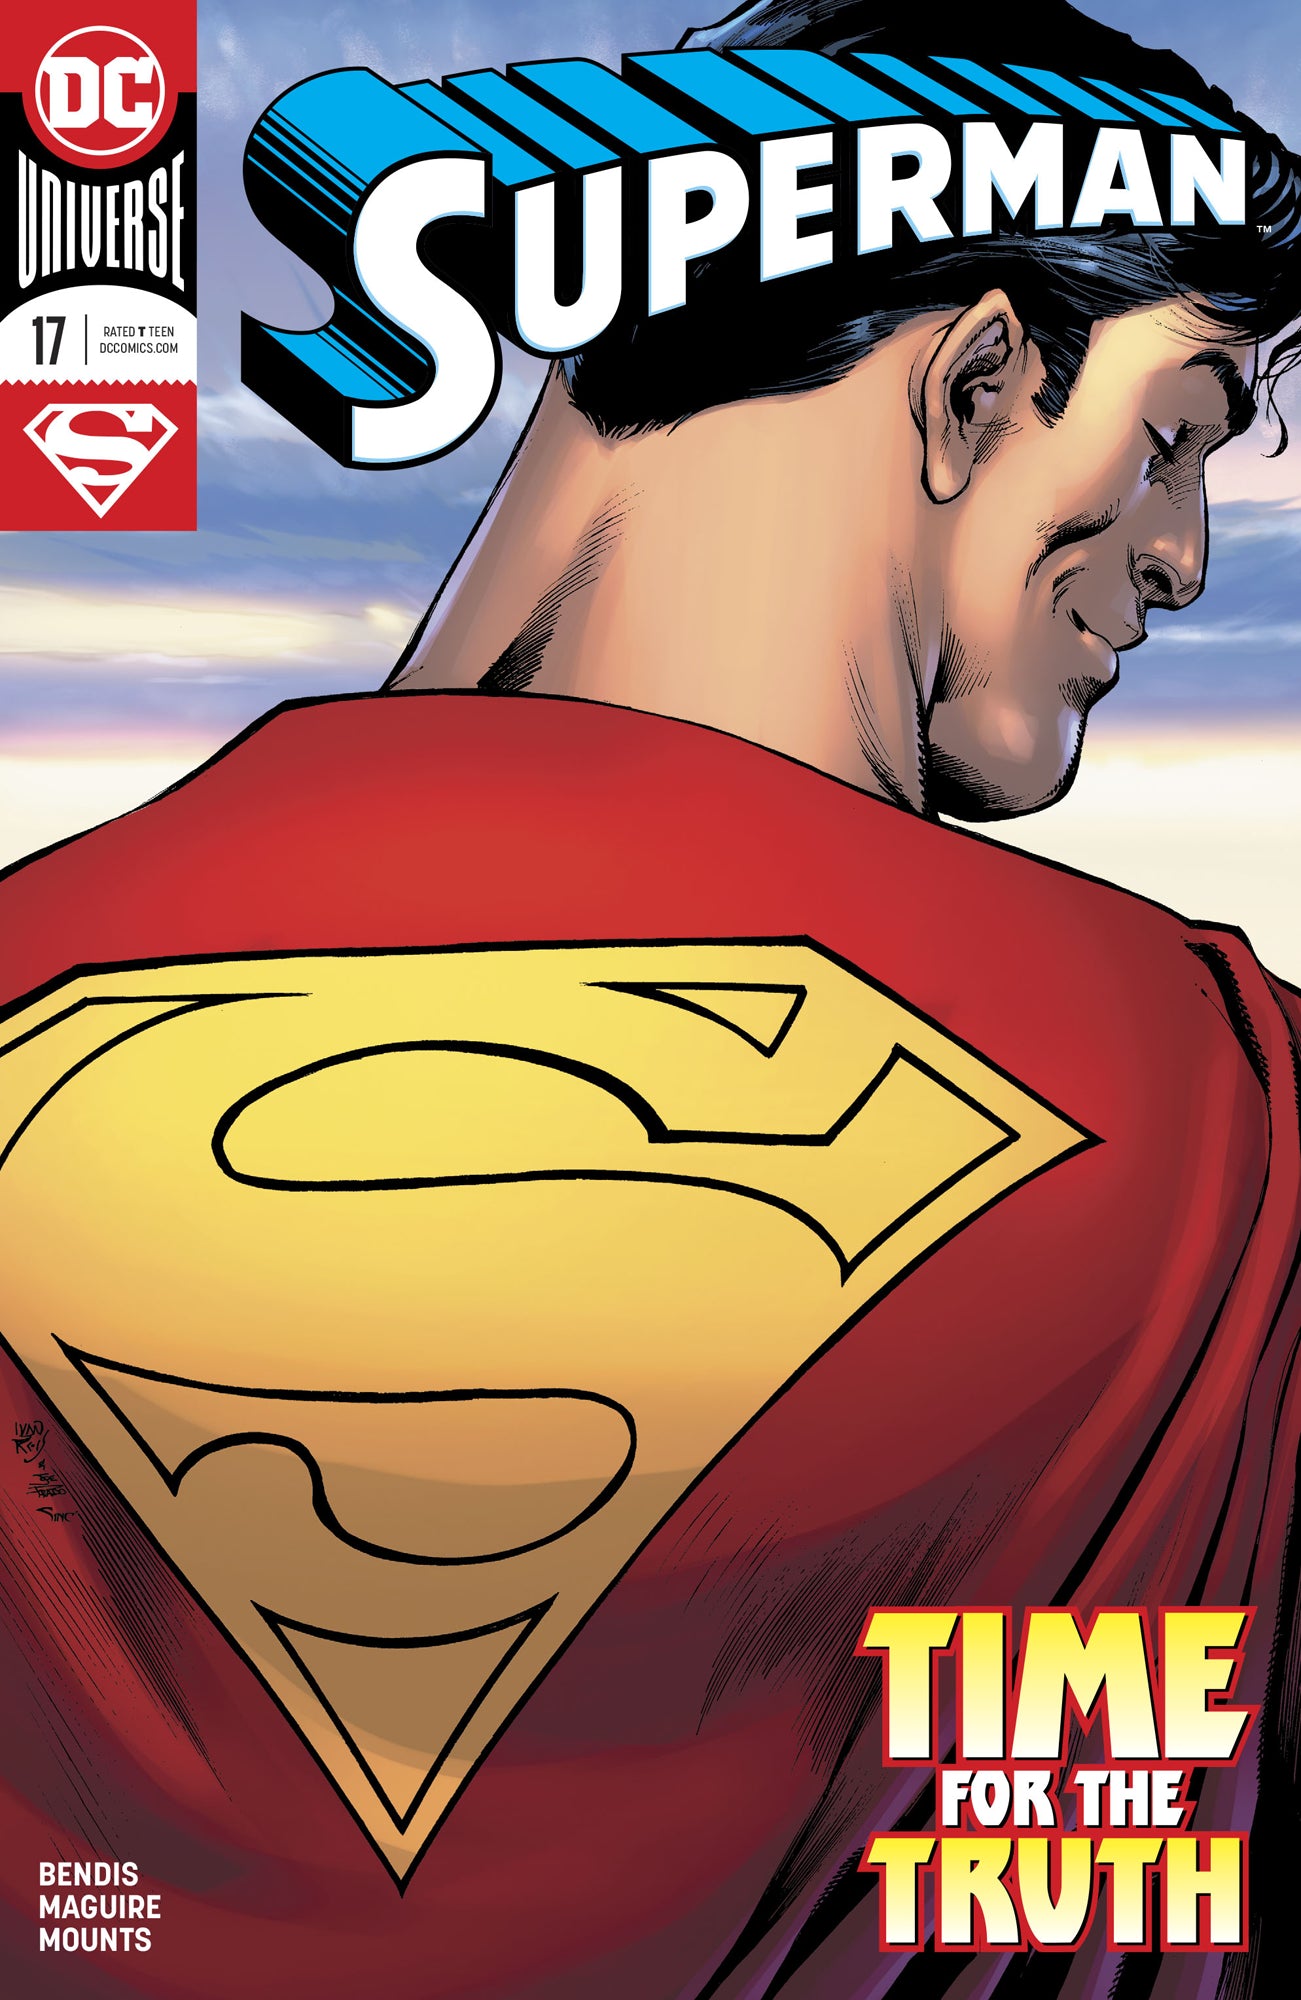 13/11/2019 SUPERMAN #17